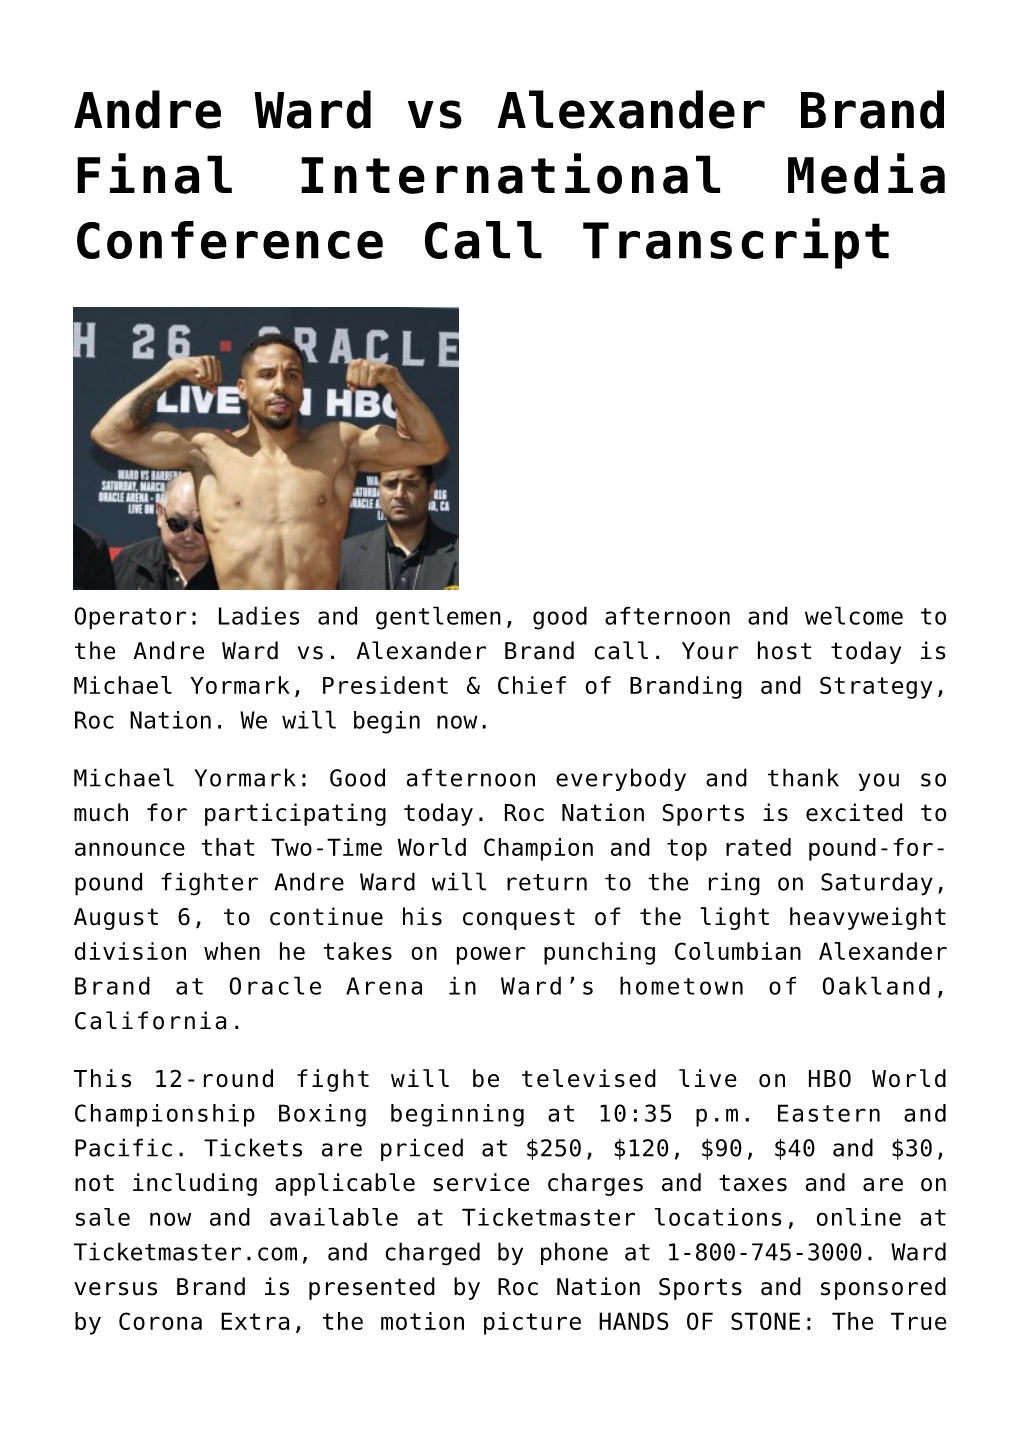 Andre Ward Vs Alexander Brand Final International Media Conference Call Transcript